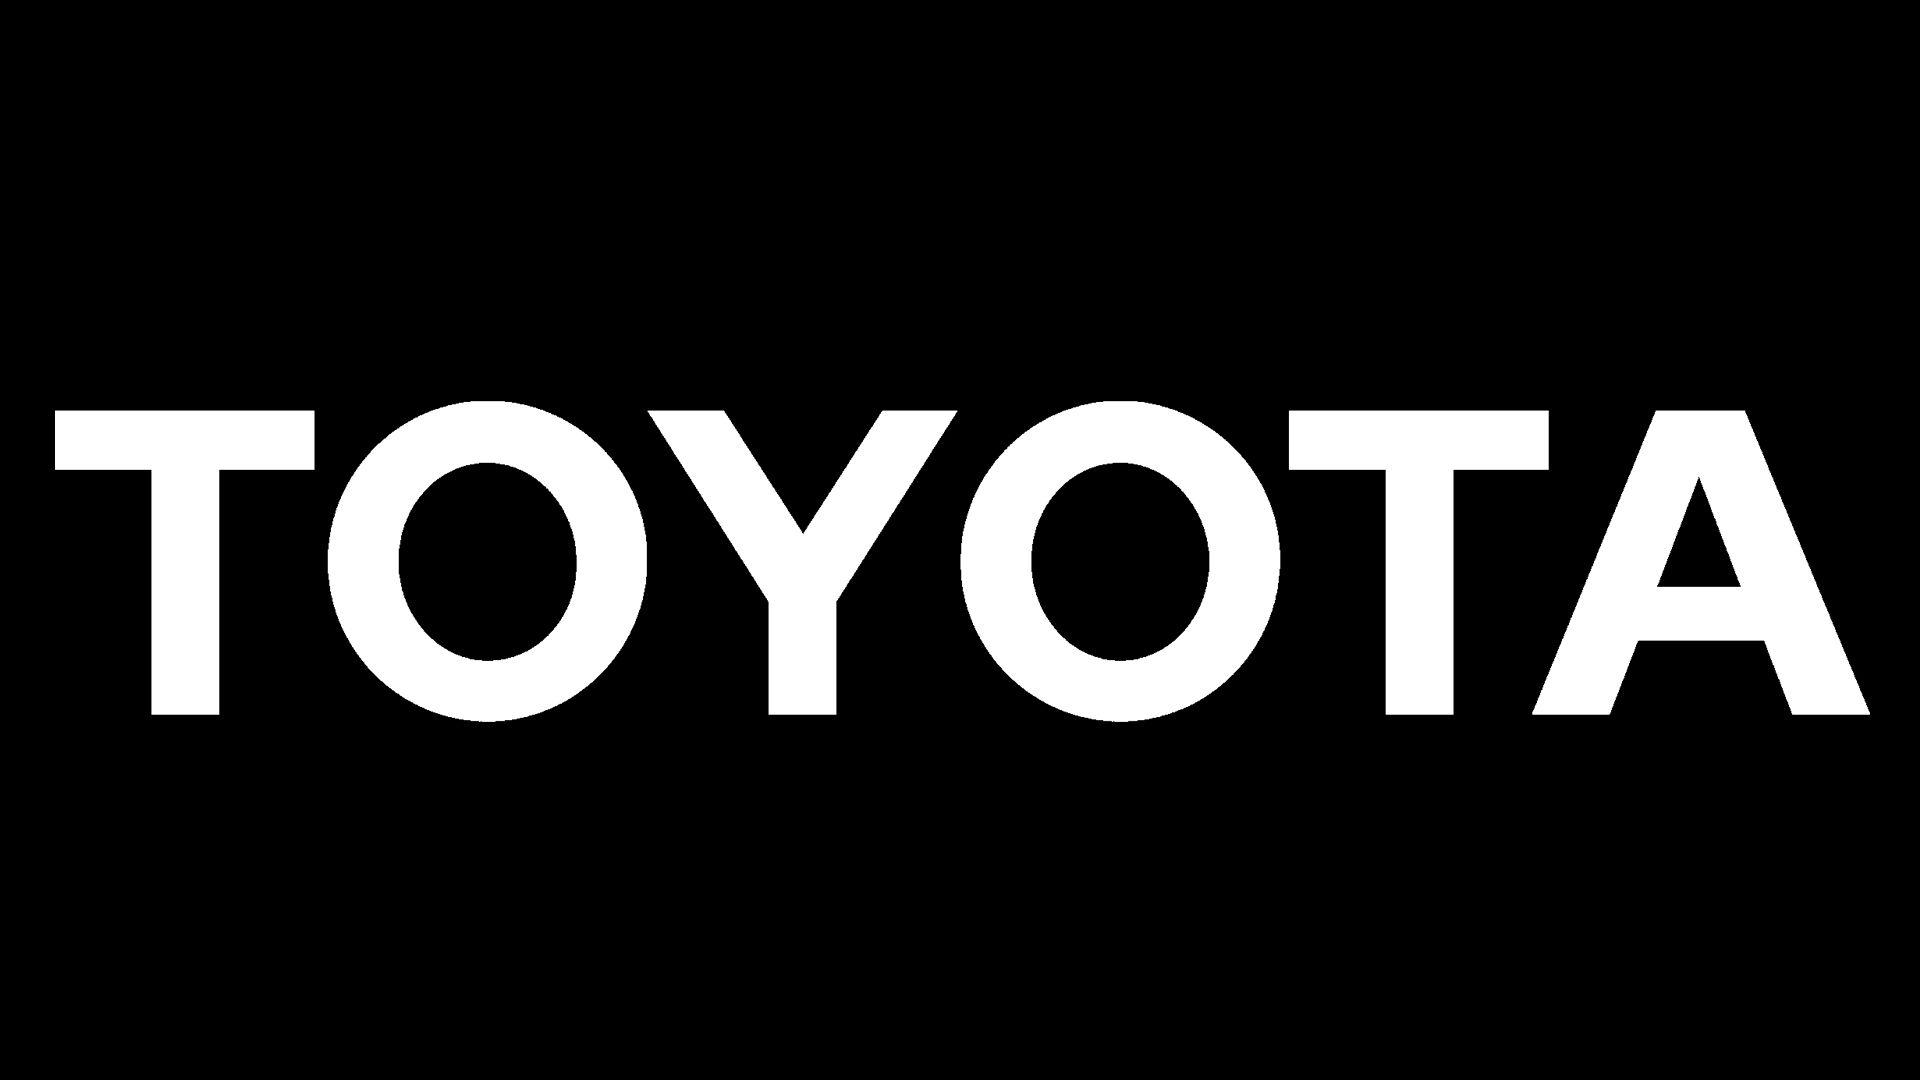 Black and White Toyota Logo - Toyota Logo, Toyota Symbol, Meaning, History and Evolution